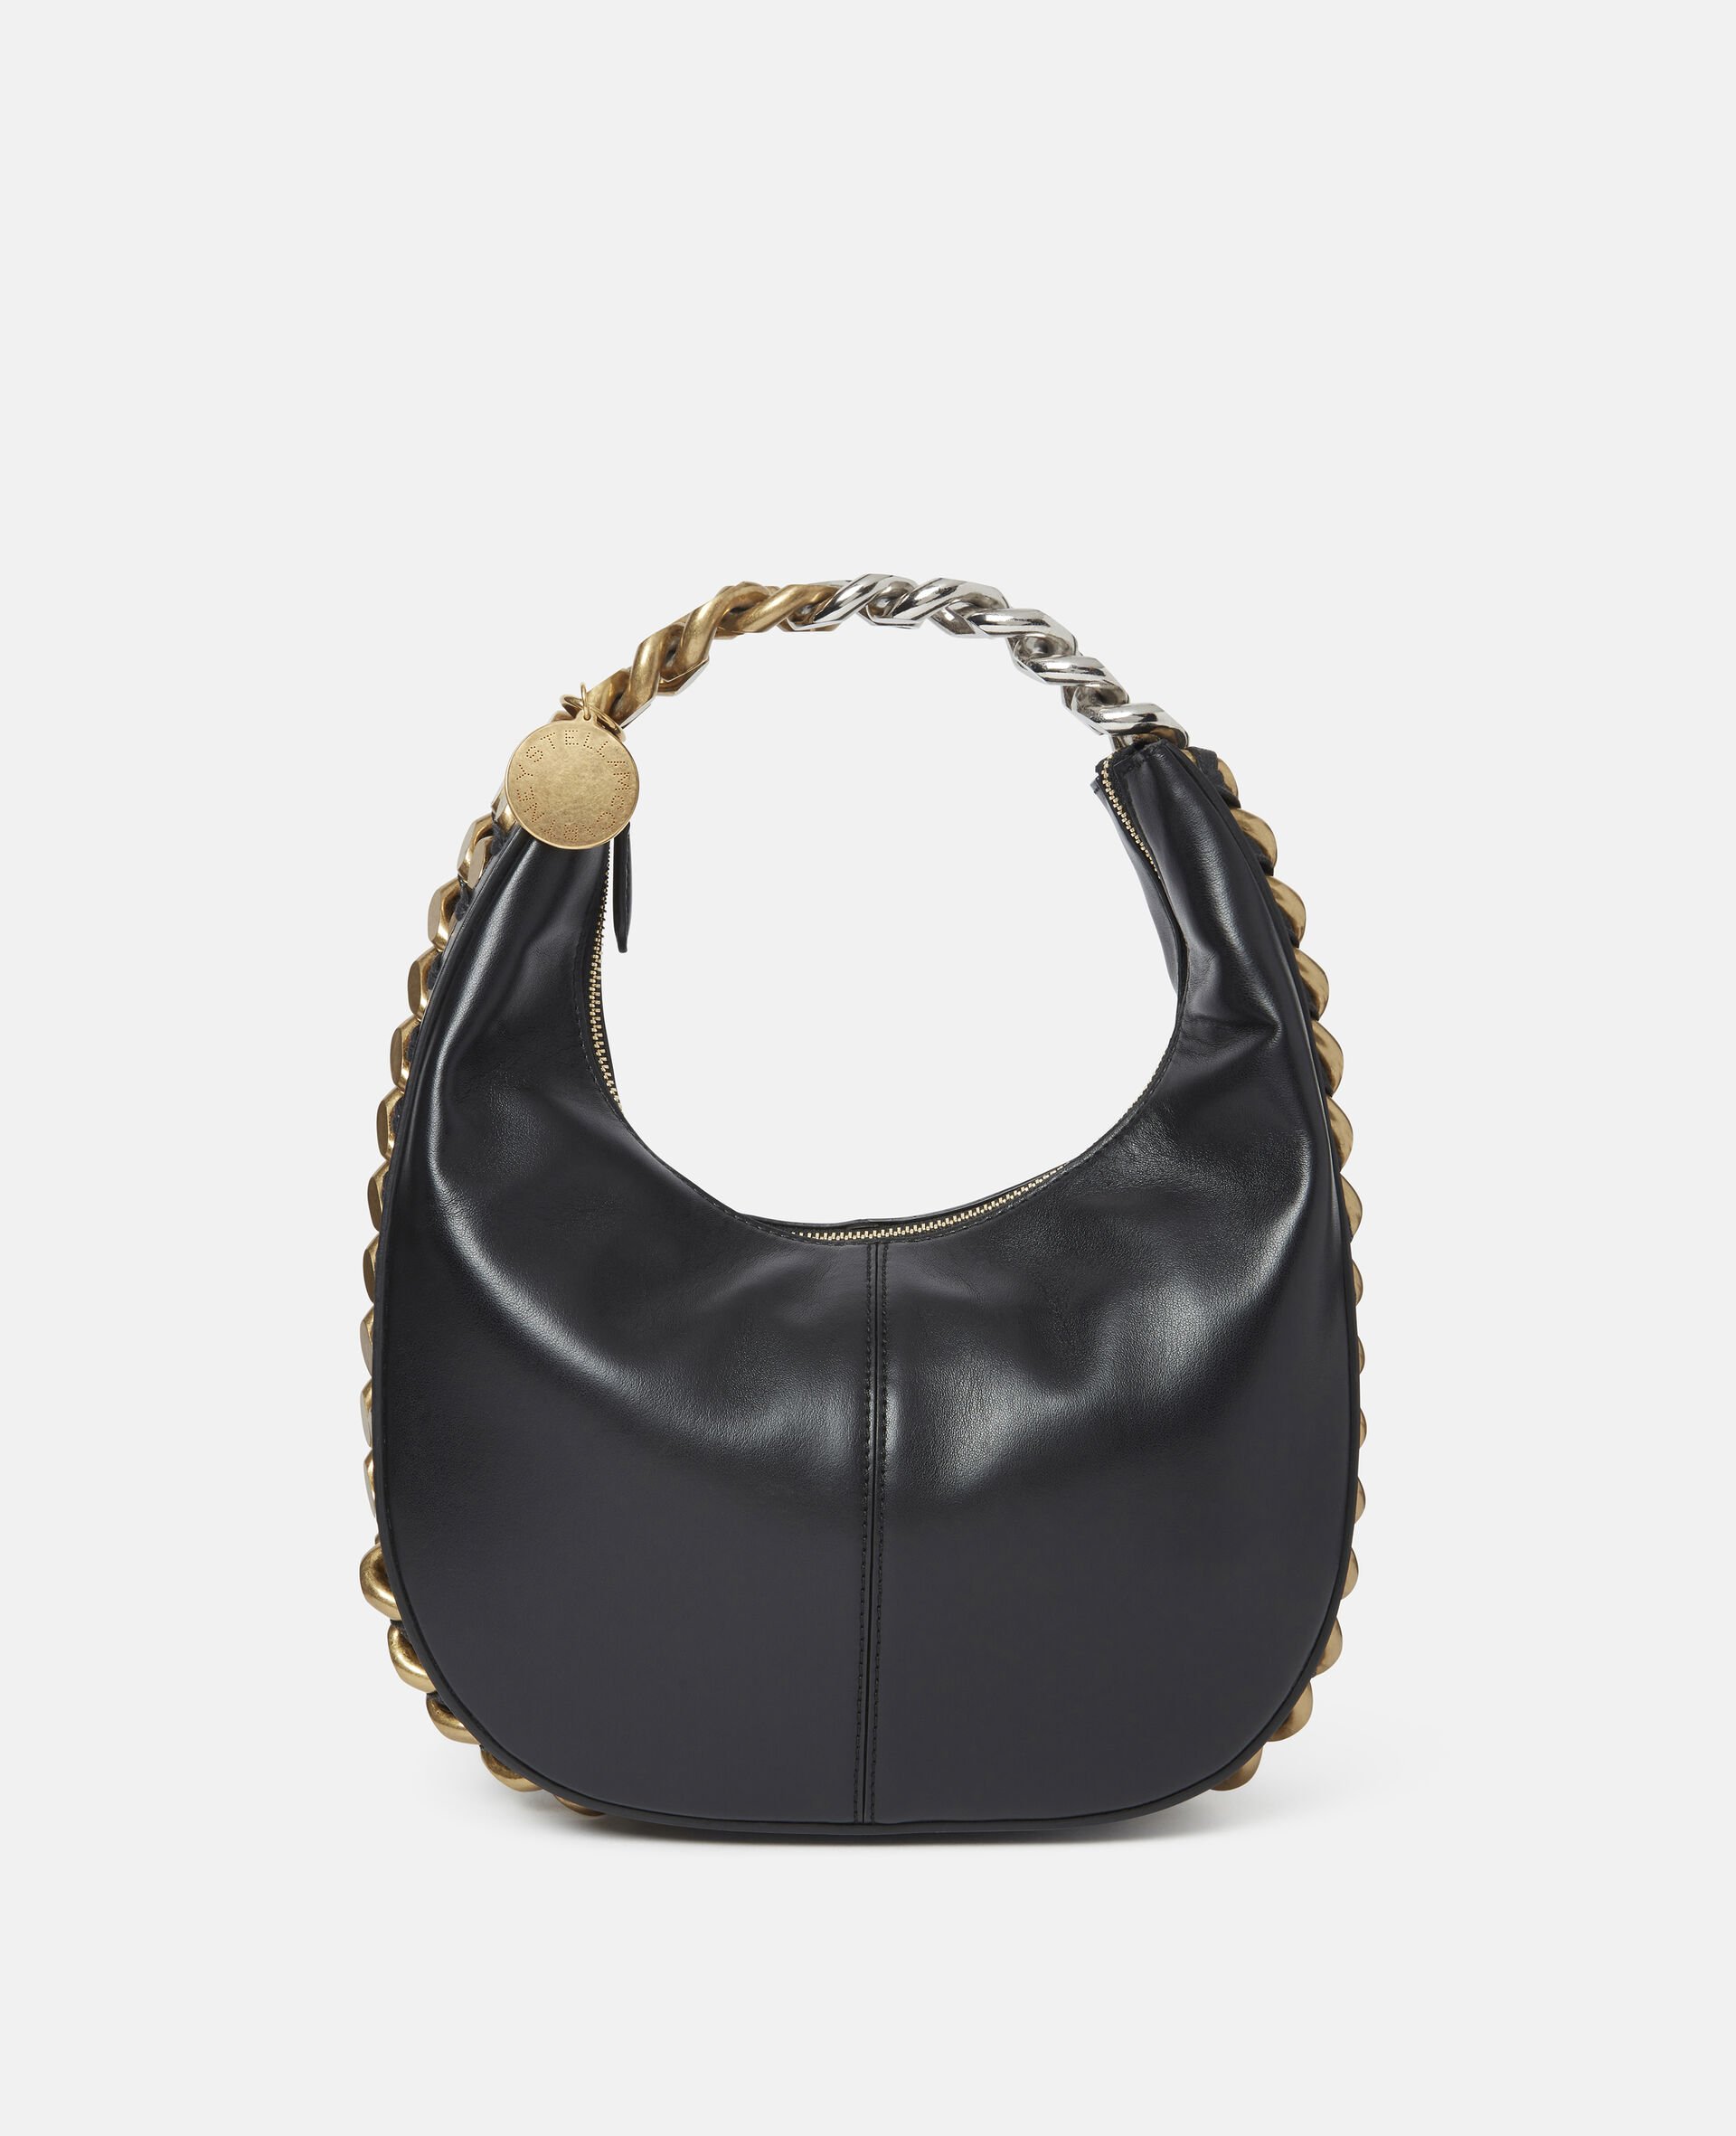 Stella McCartney Frayme Small Zipped Shoulder Bag in Black.jpg